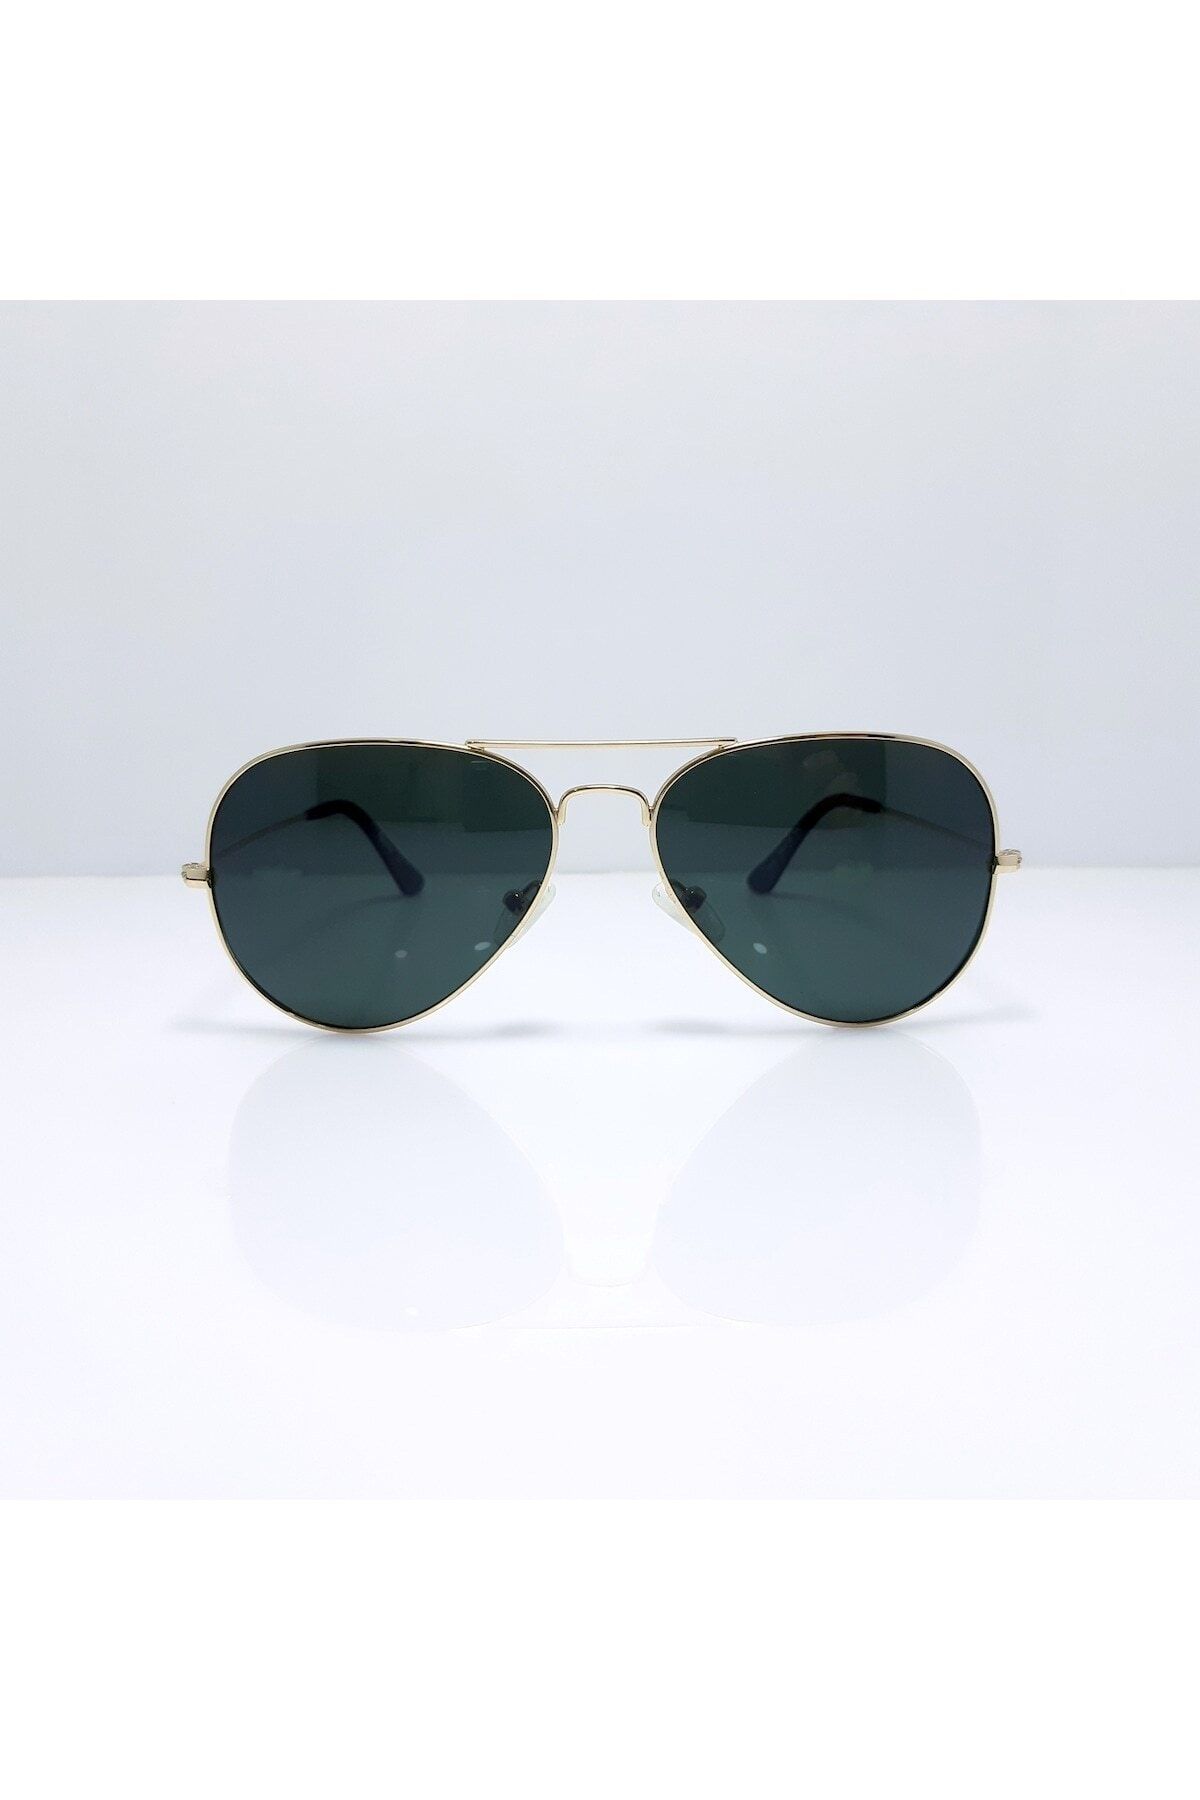 Benx Sunglasses Unisex Metalik Gri 1508